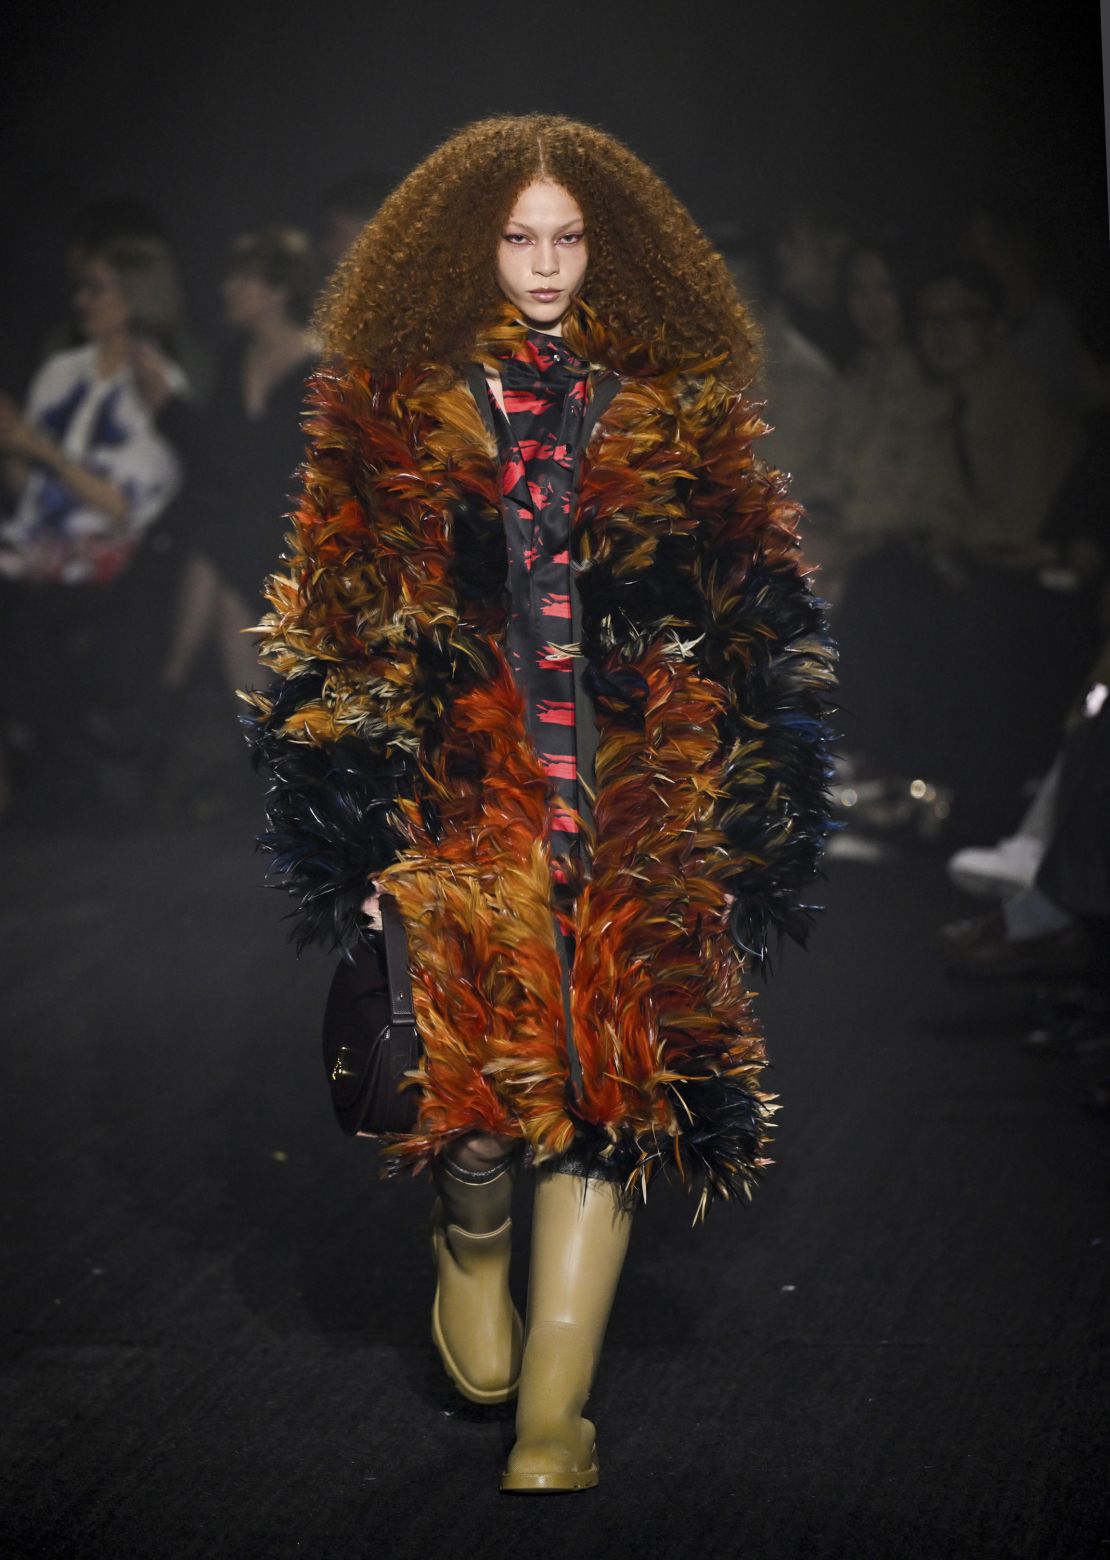 Burberry's Daniel Lee makes his big debut at London Fashion Week